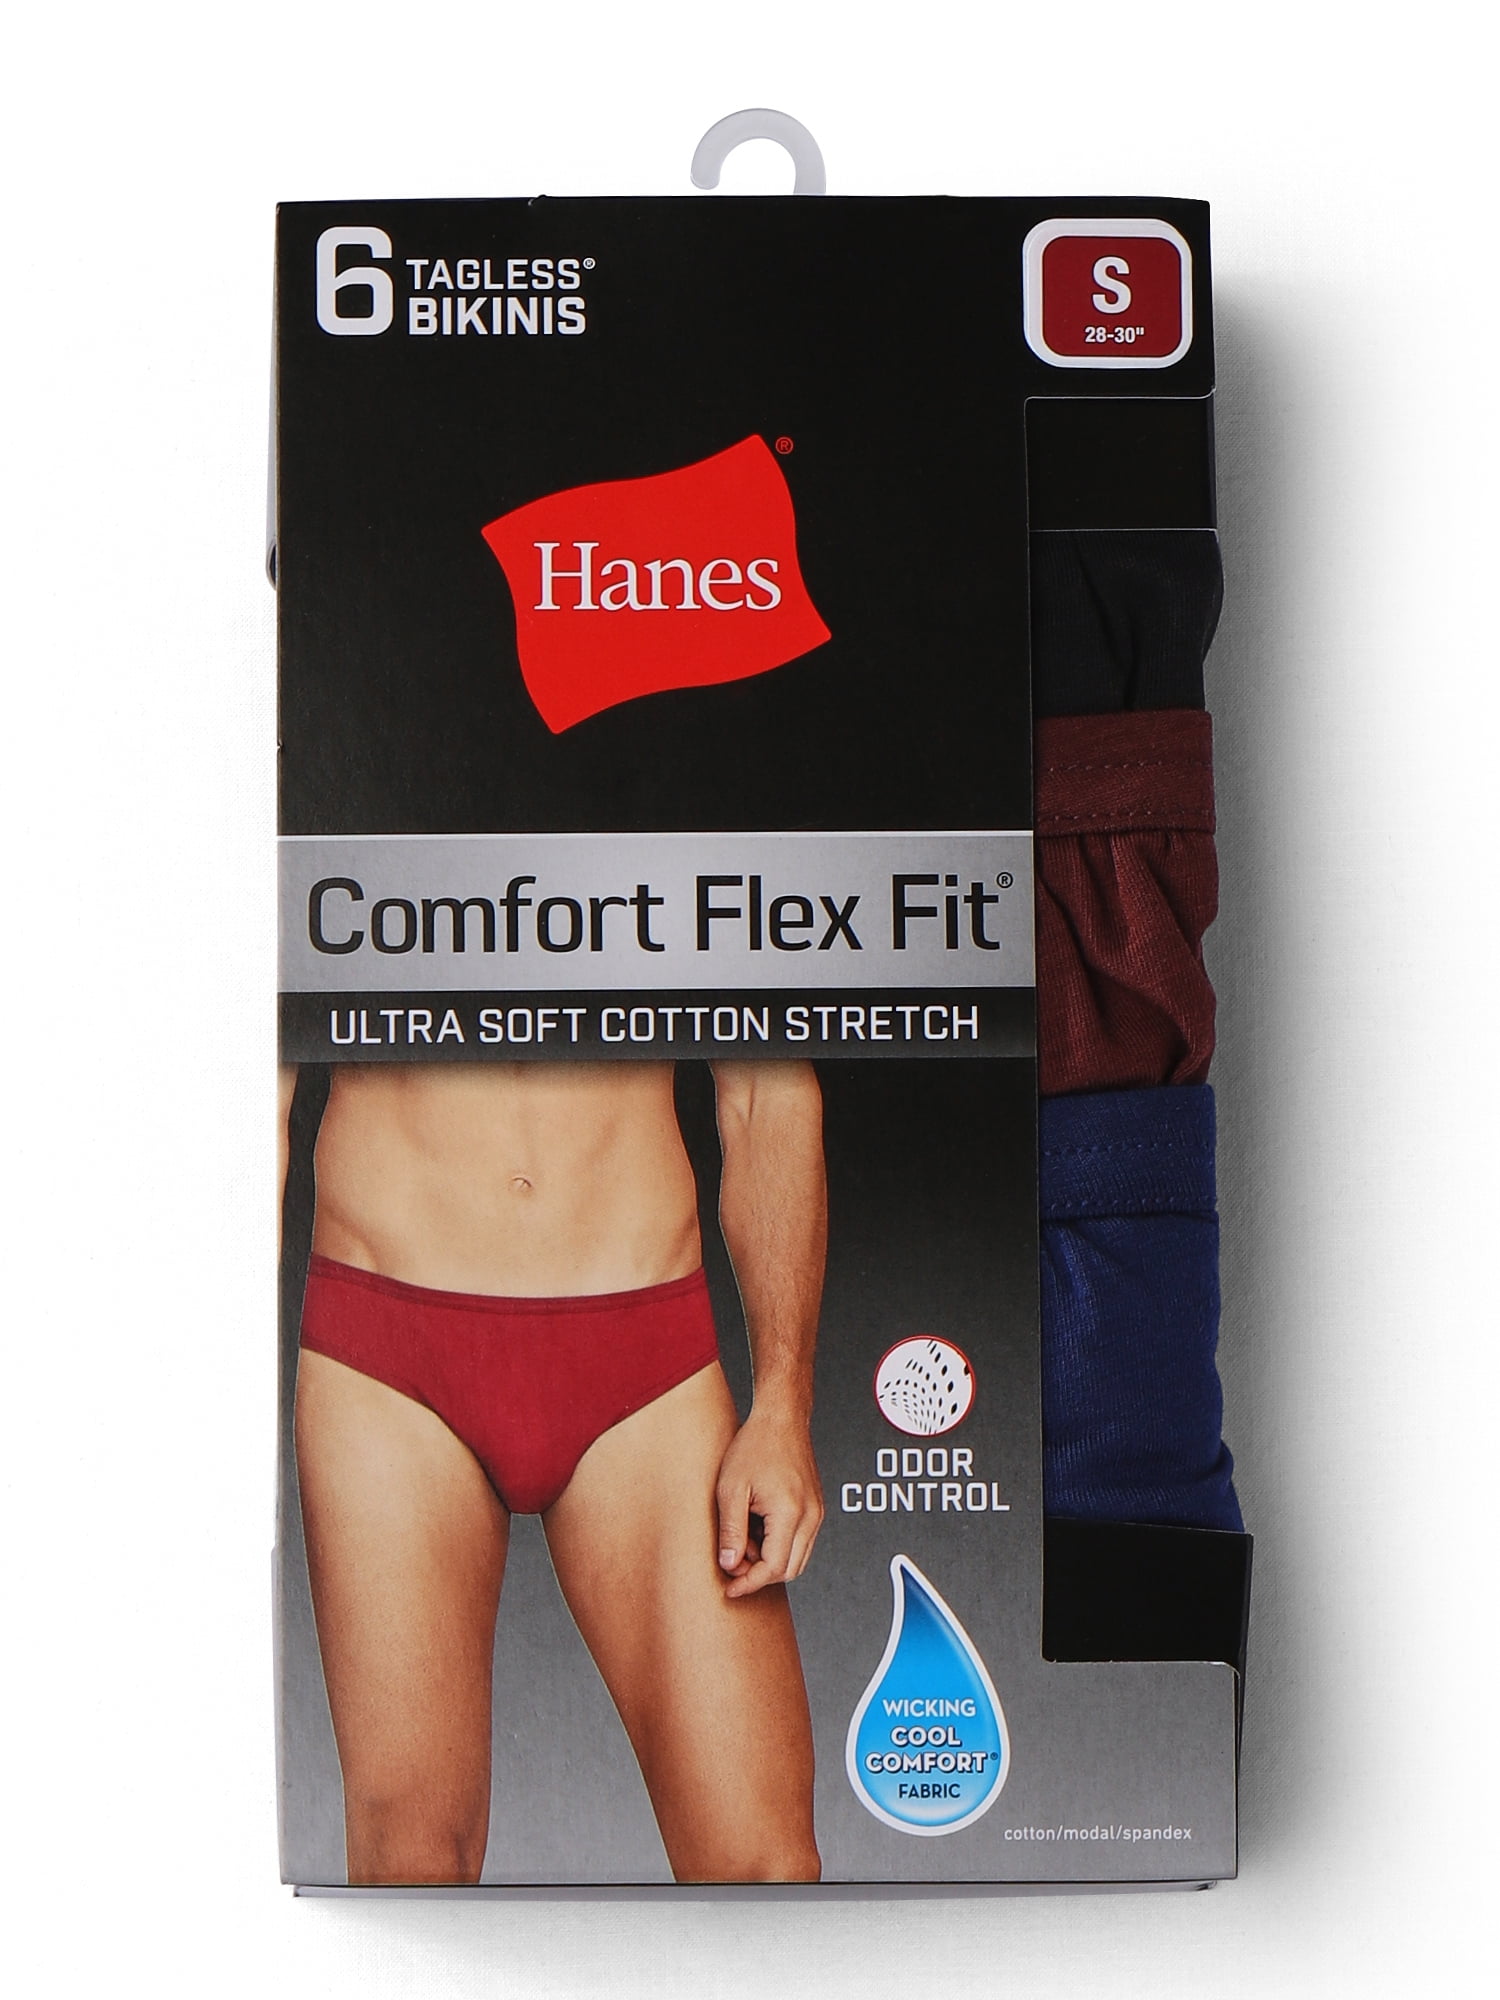 Hanes Men's Comfort Flex Fit Ultra Soft Cotton Stretch Bikinis, 6